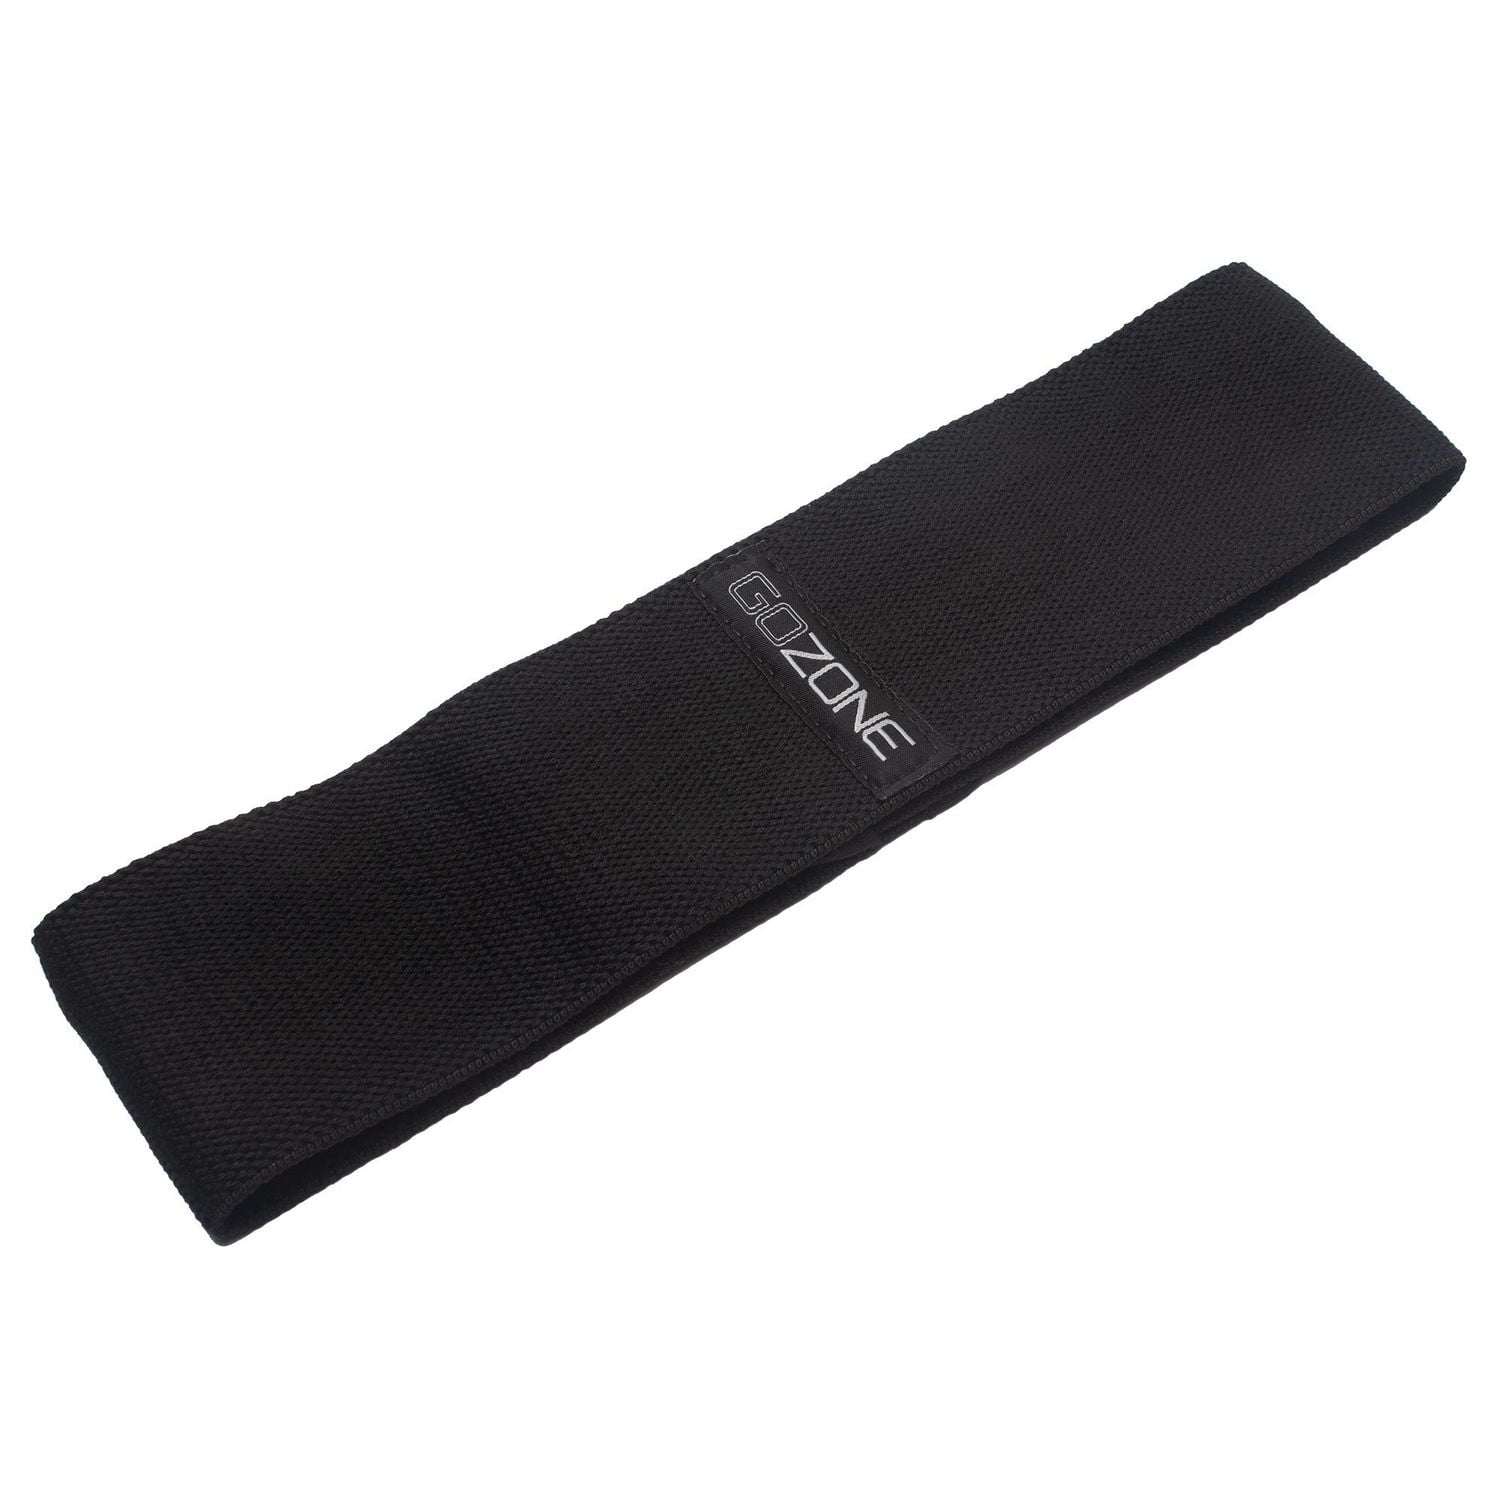 GoZone Solid Fabric Resistance Band – Black/Orange, Non-slip design 